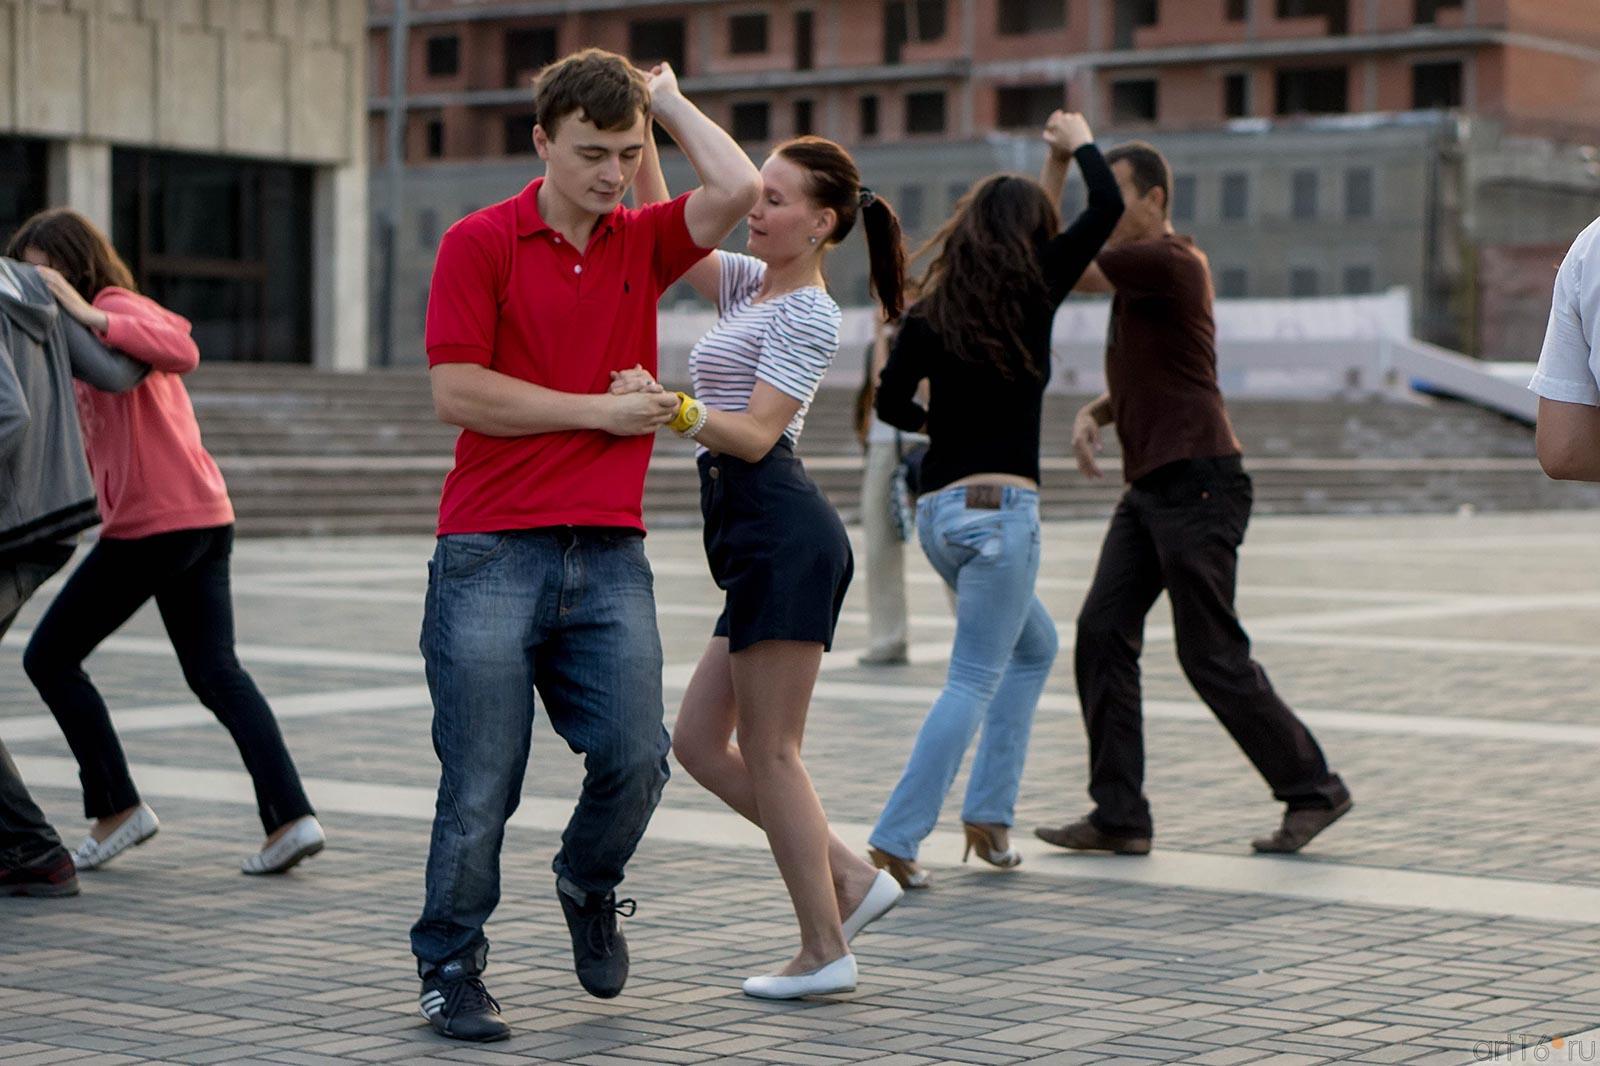  Танцуем сальсу. Казань, площадка перед театром Г.Камала,  август 2012::Сальса, Танго на улицах Казани